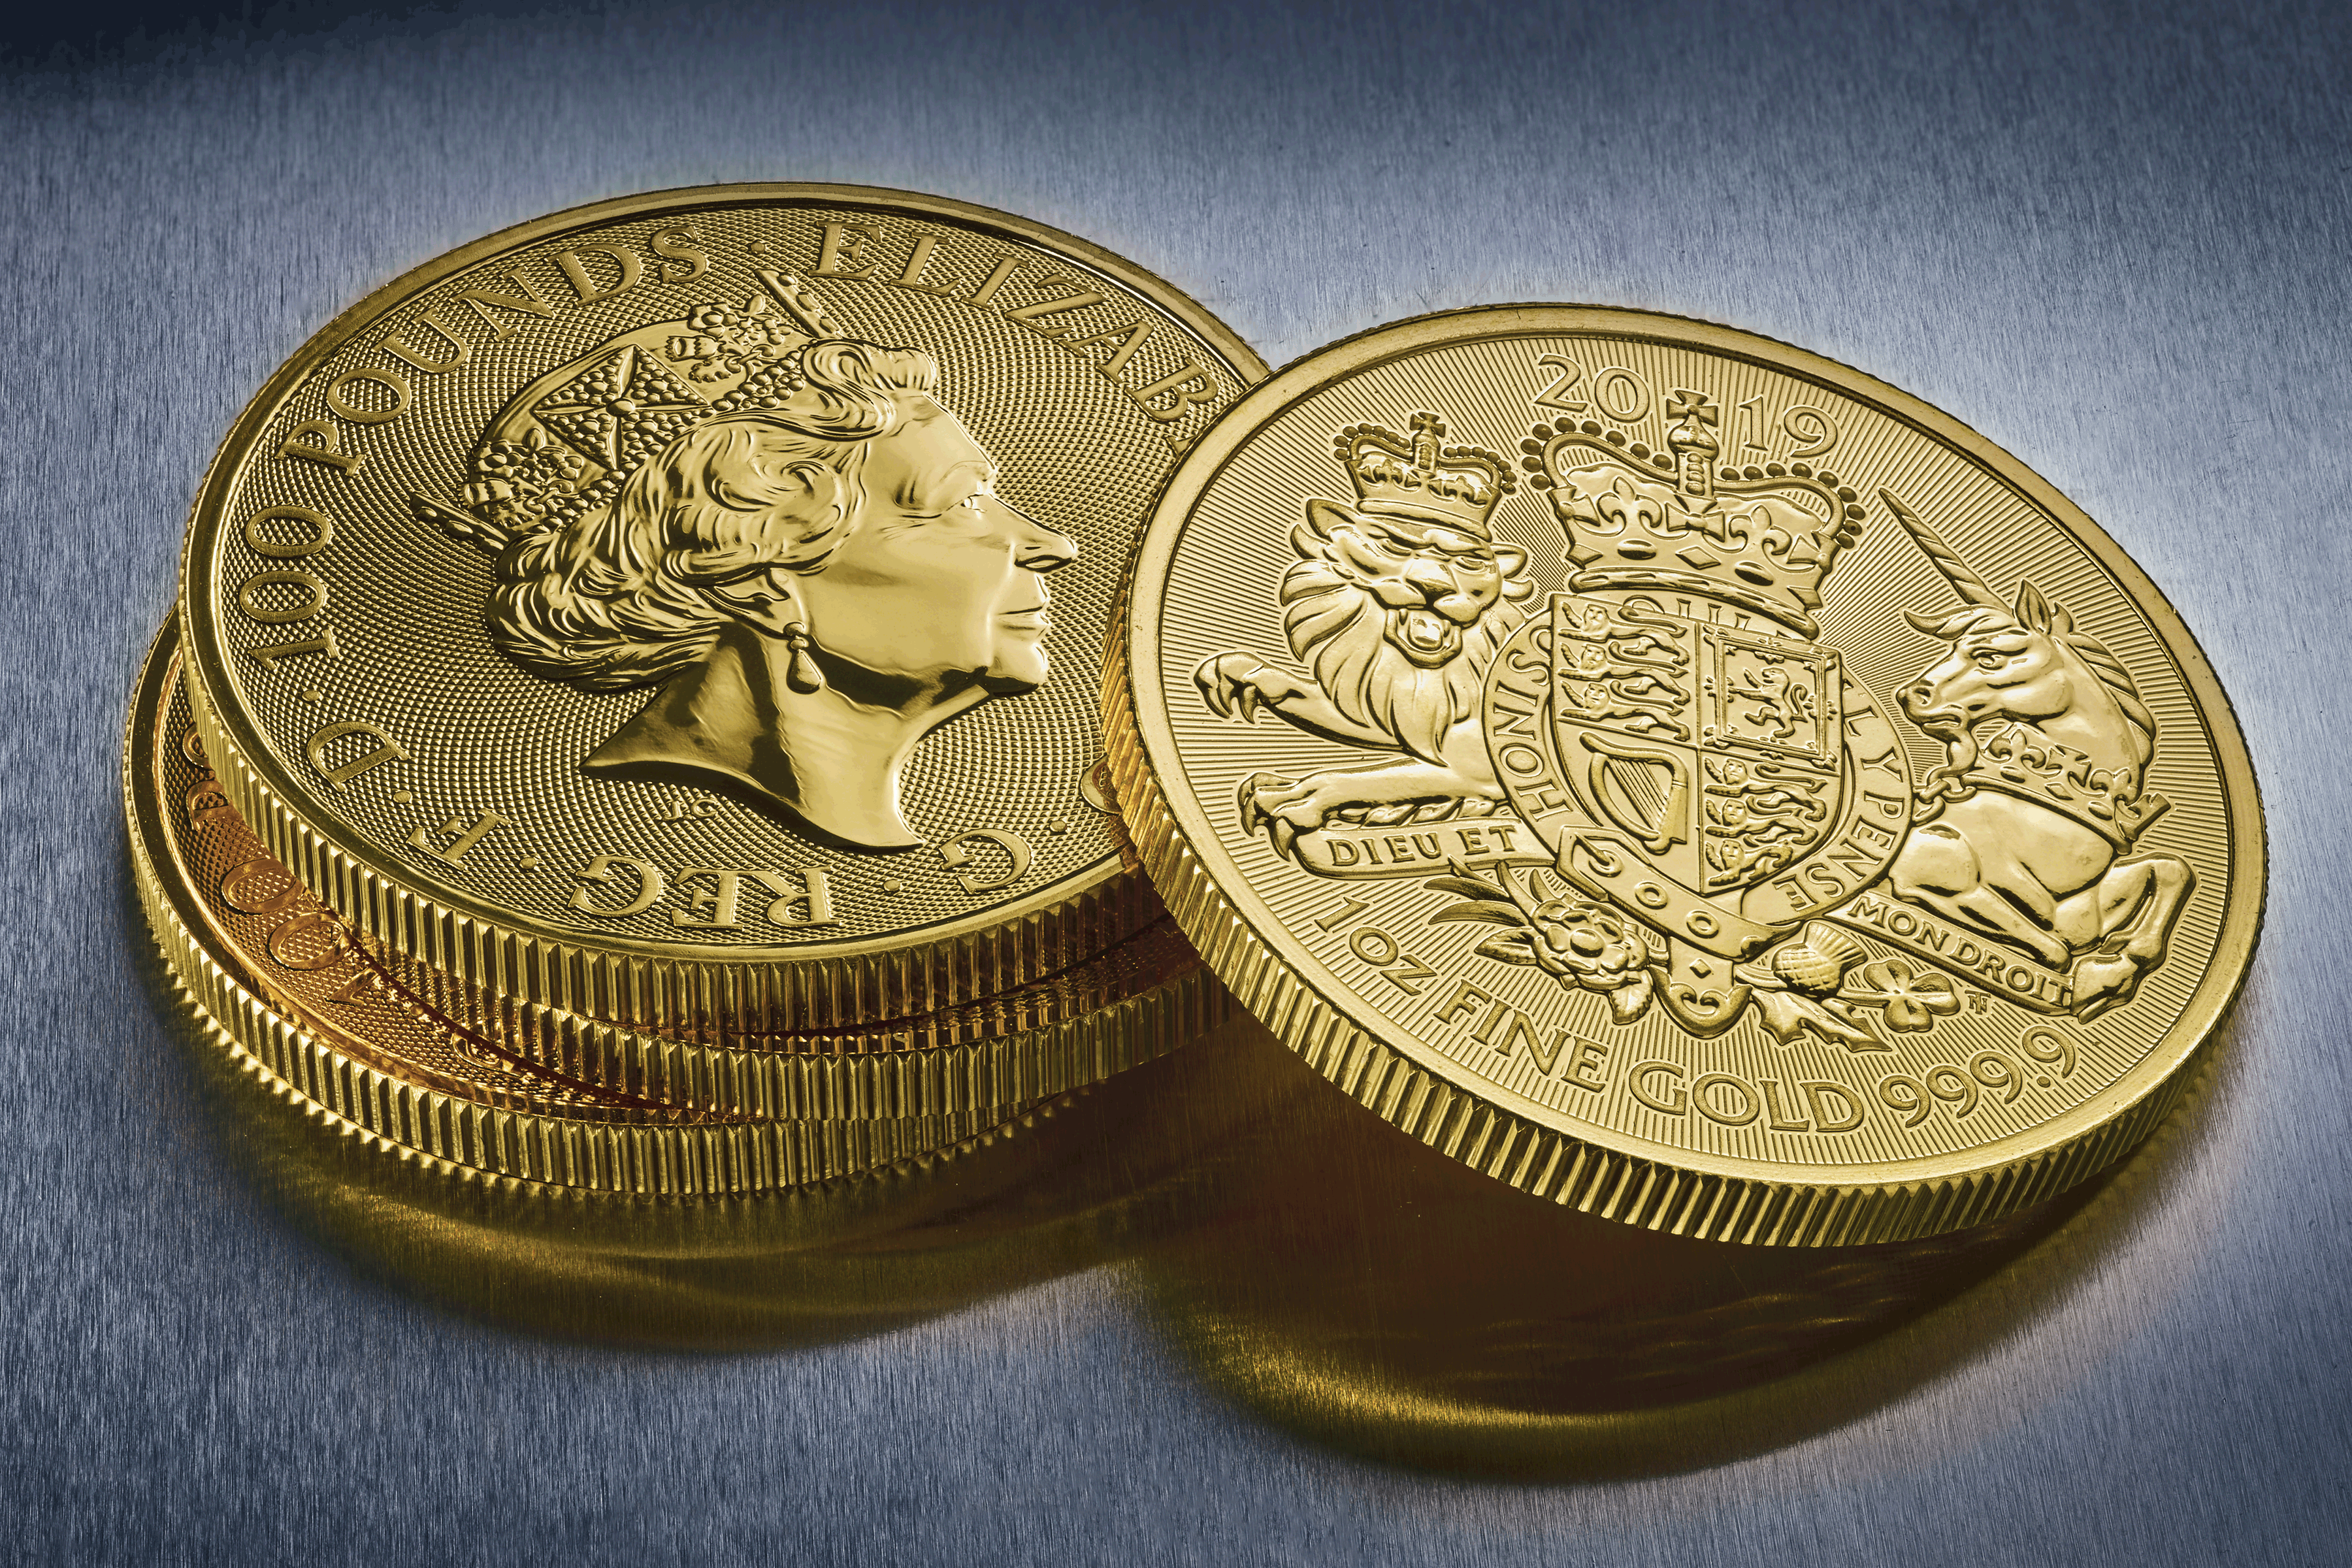 The Royal Arms gold 1 ounce coin